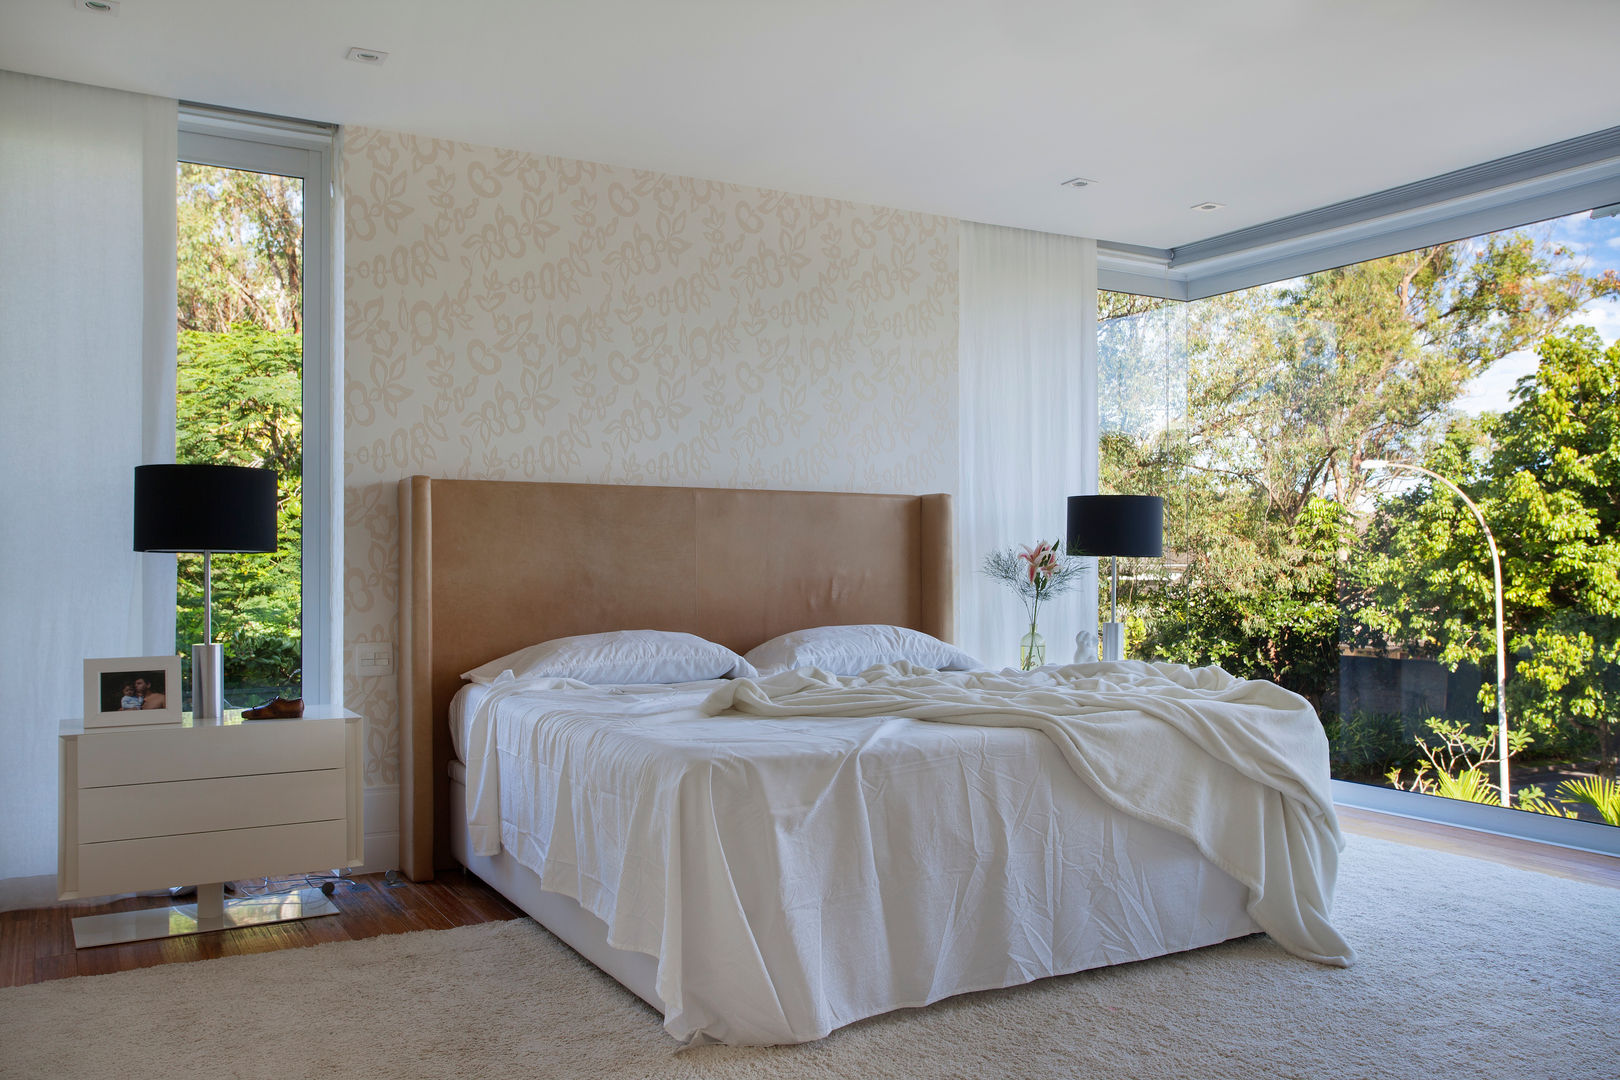 Residência RP Wimbledon, BC Arquitetos BC Arquitetos Dormitorios modernos: Ideas, imágenes y decoración